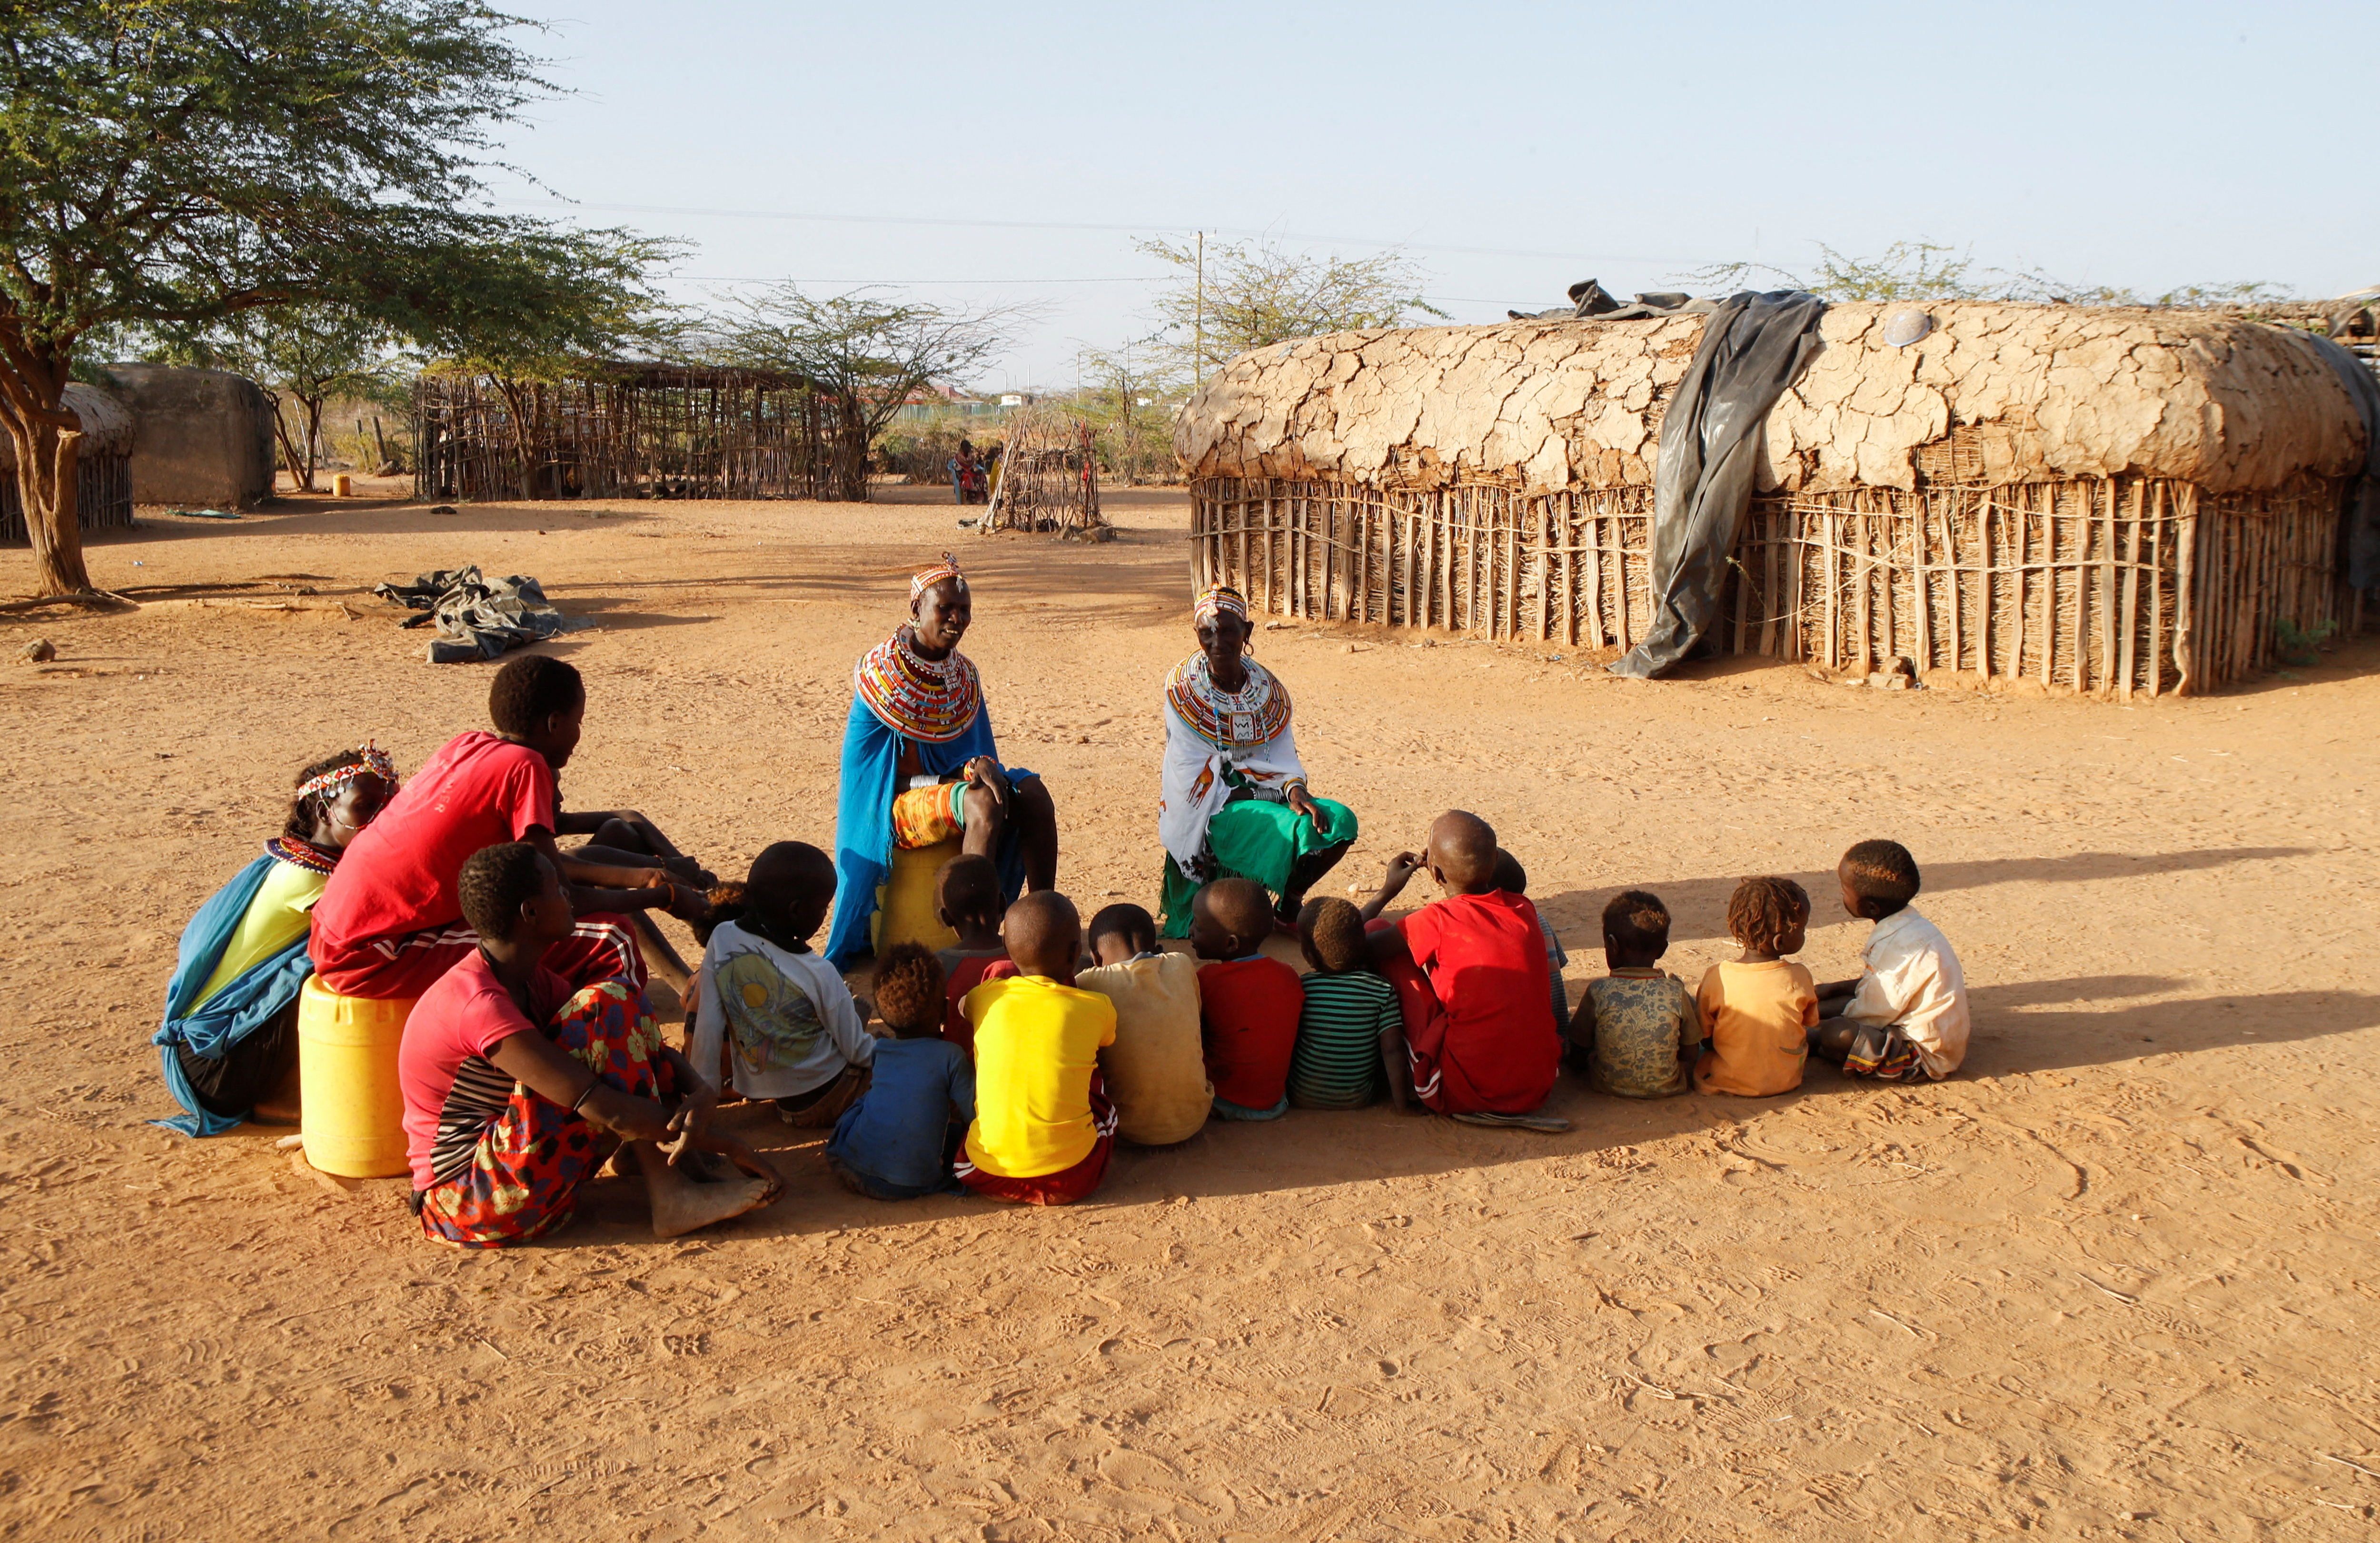 Women-only village in Kenya provides haven for FGM survivors in Samburu